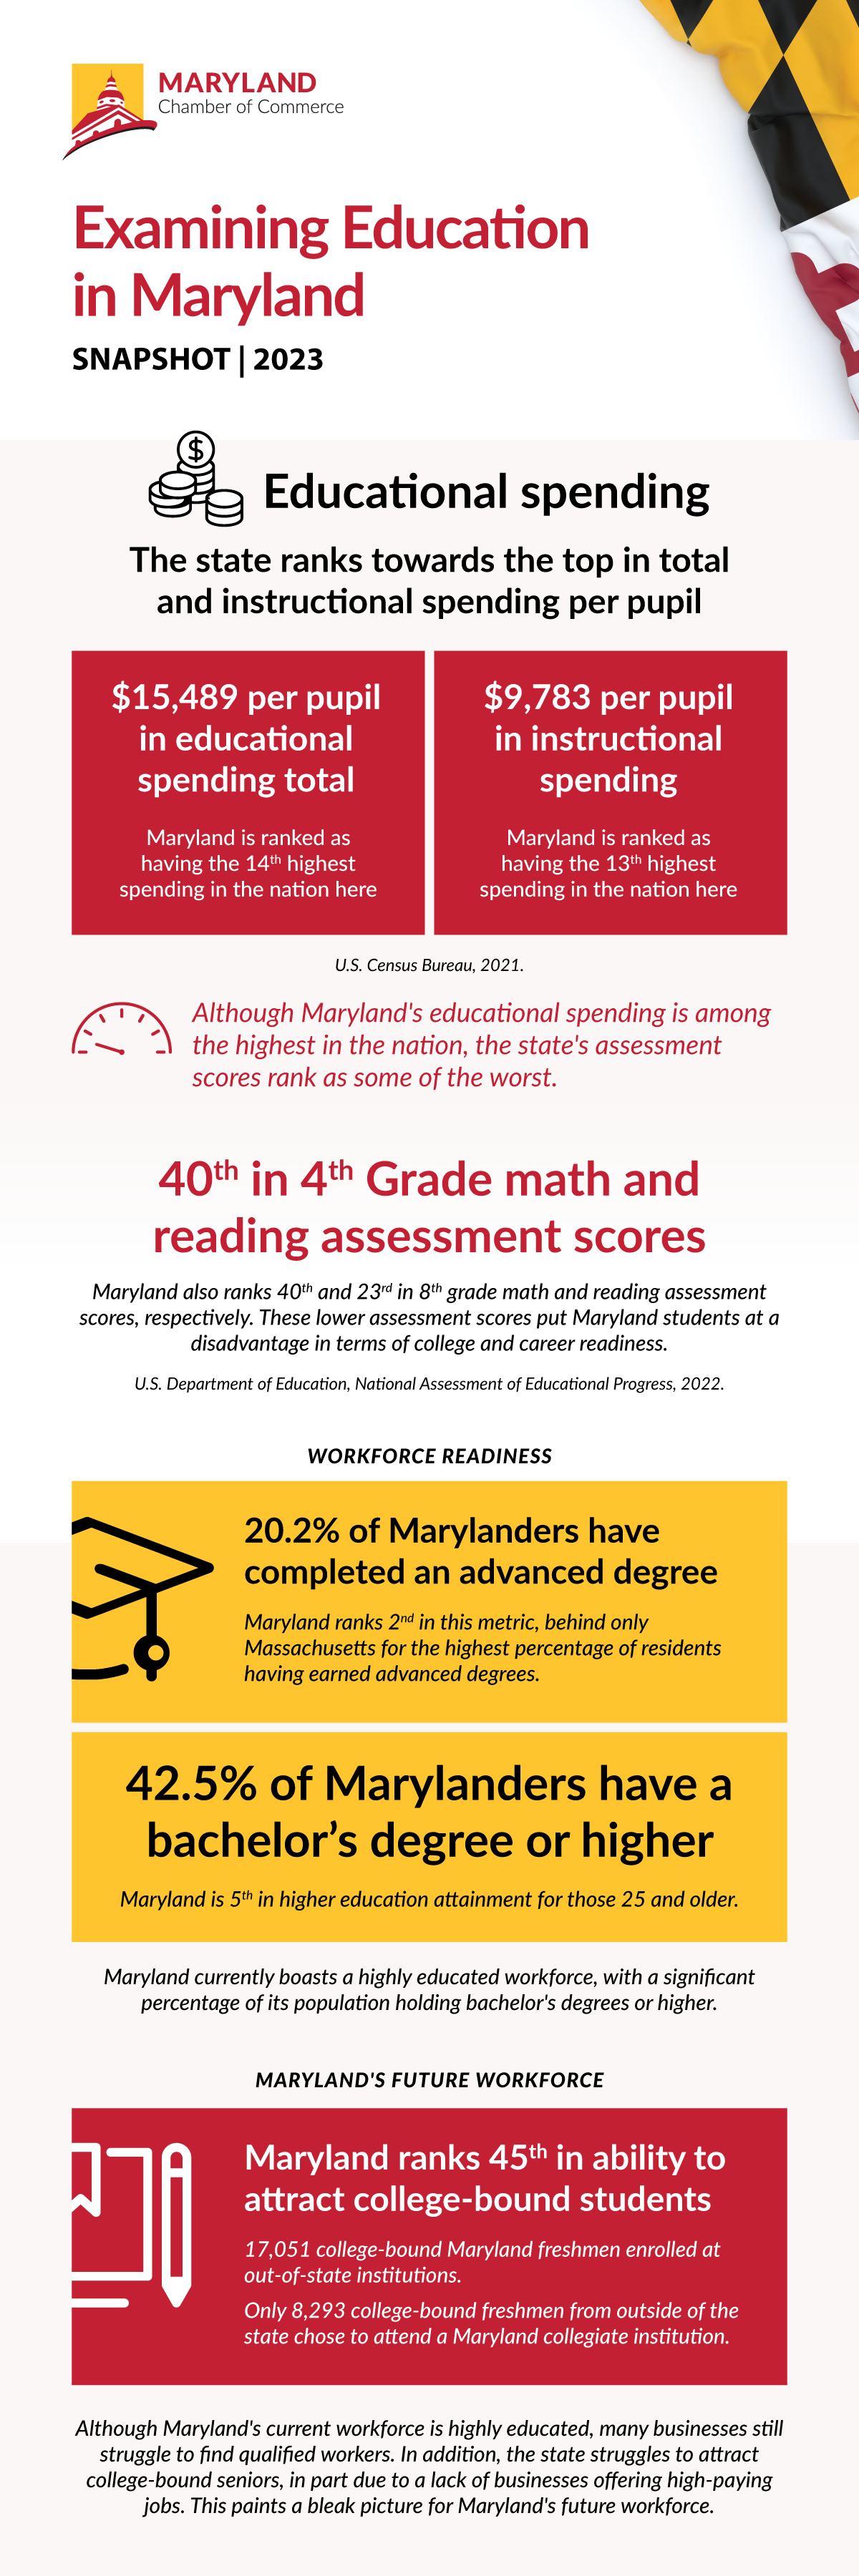 snapshot of educational spending in Maryland in 2023